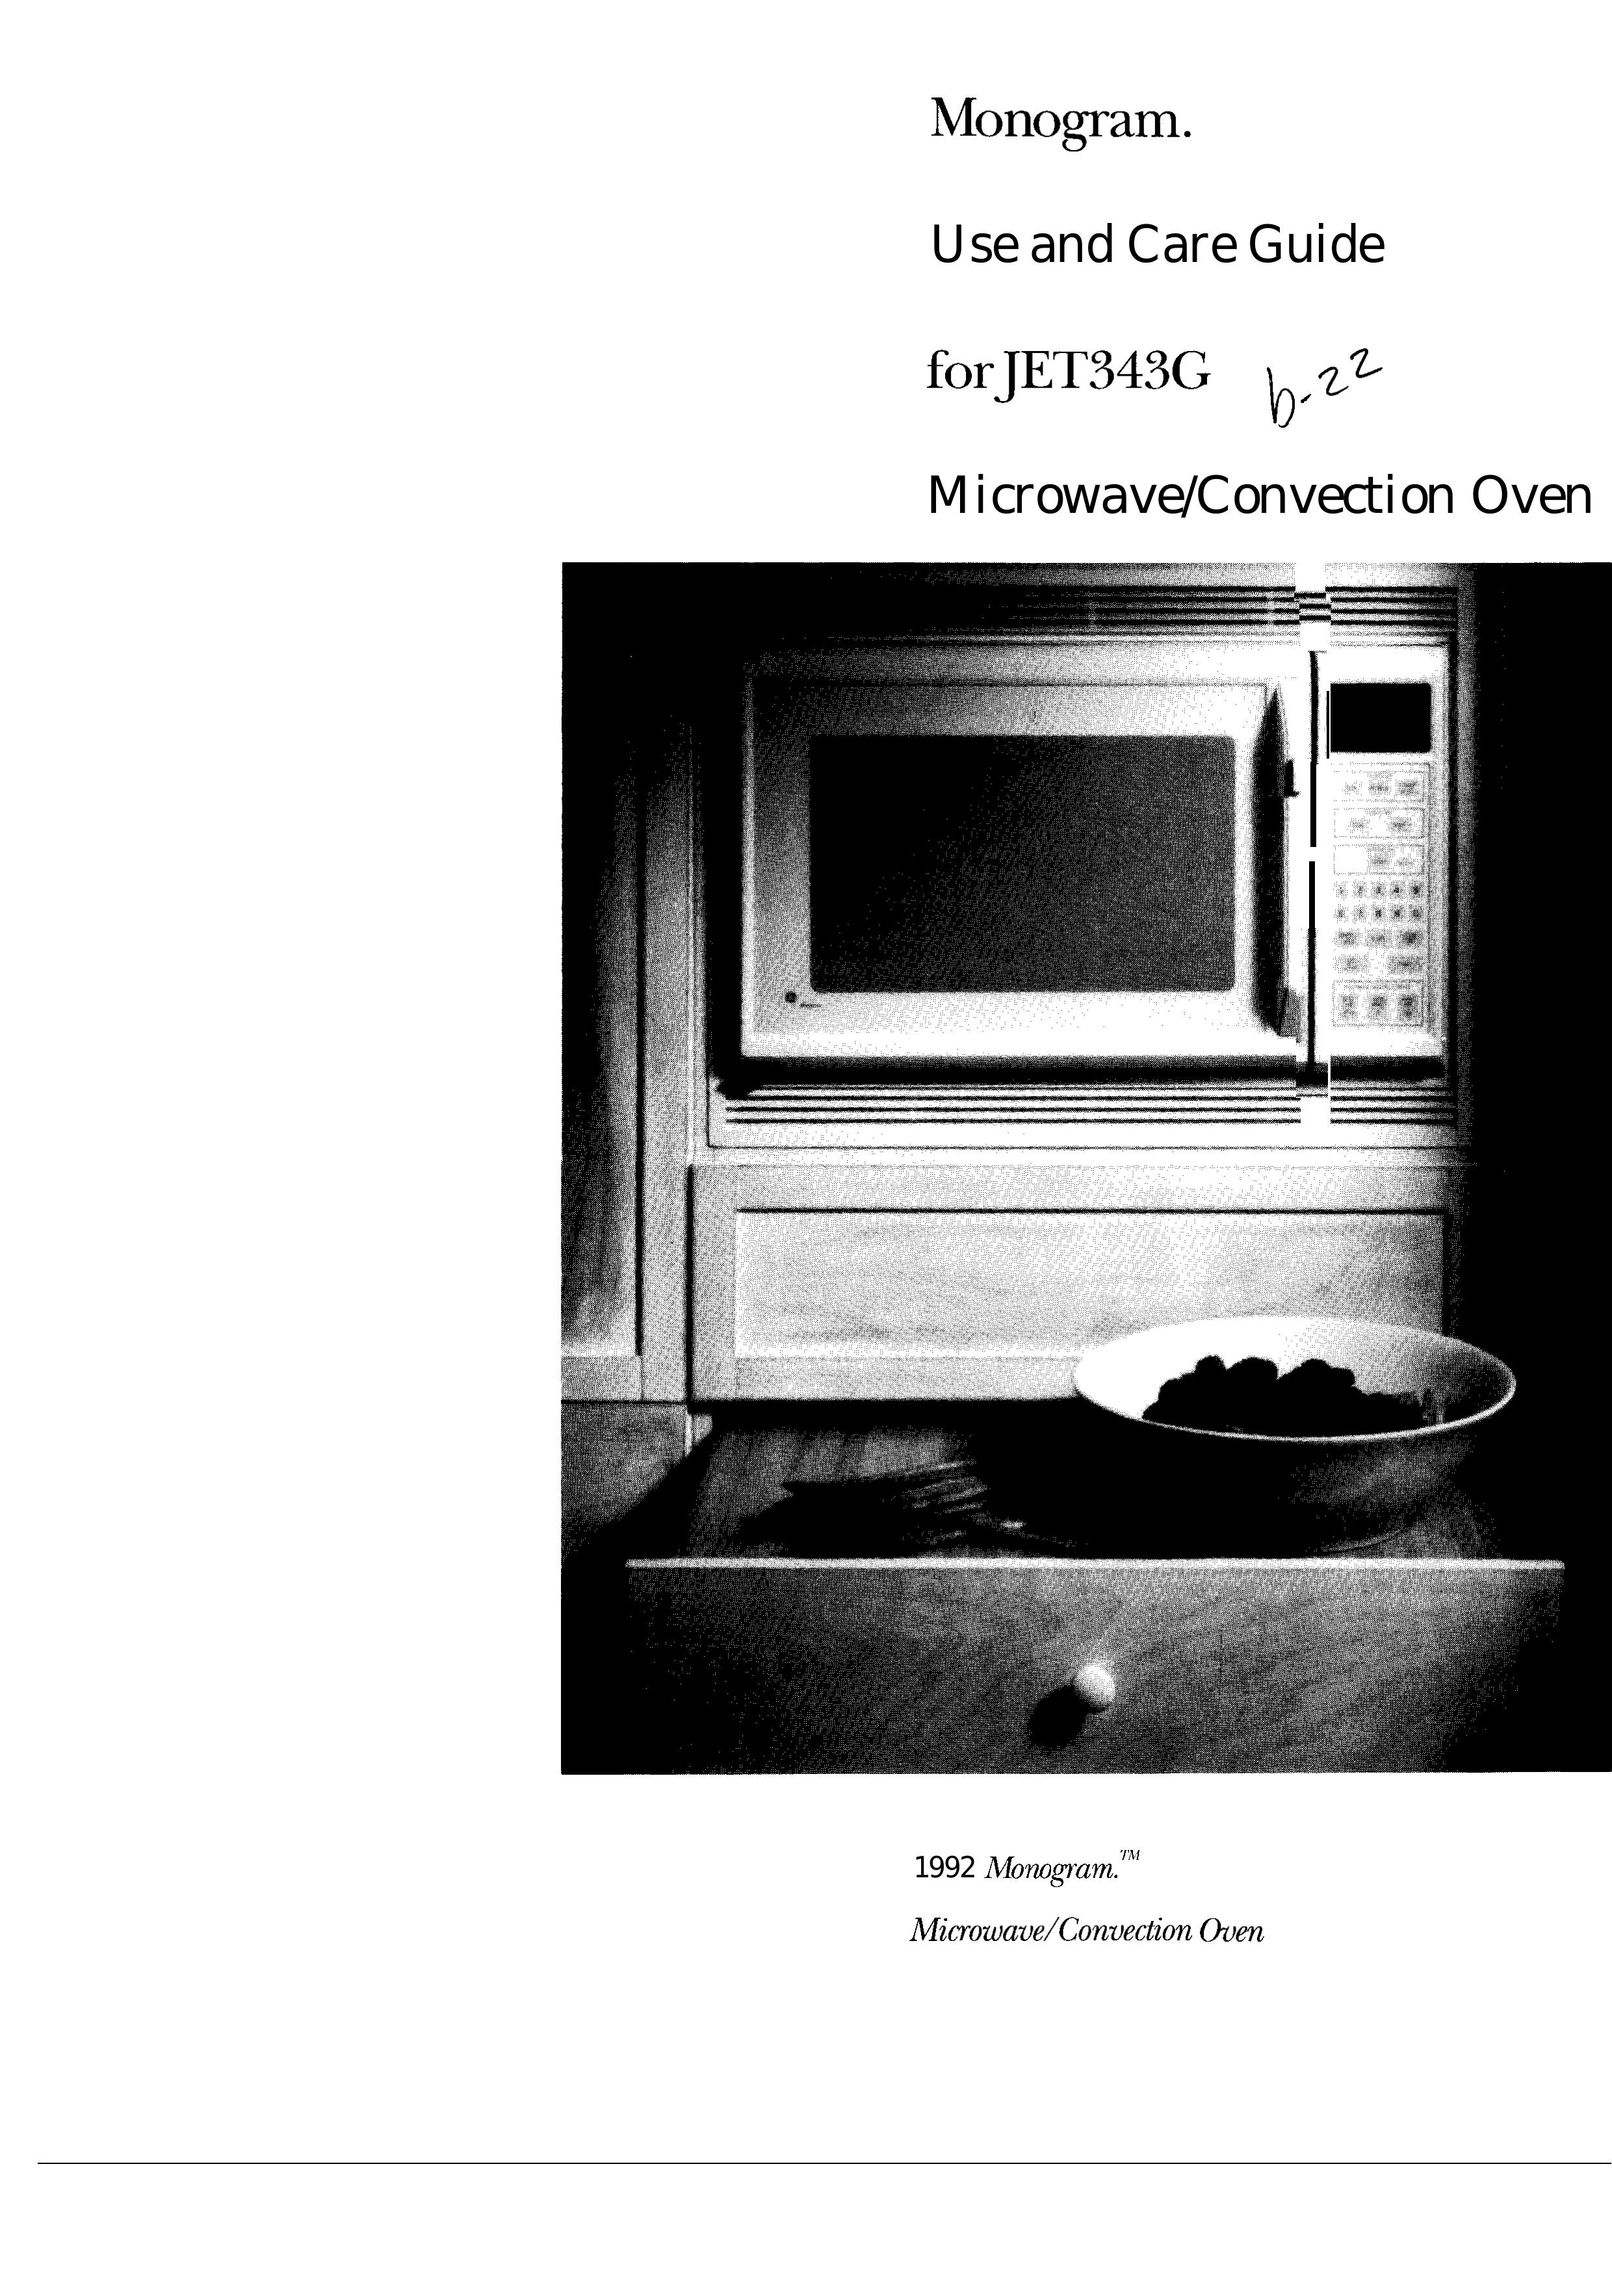 GE Monogram JET343G Microwave Oven User Manual